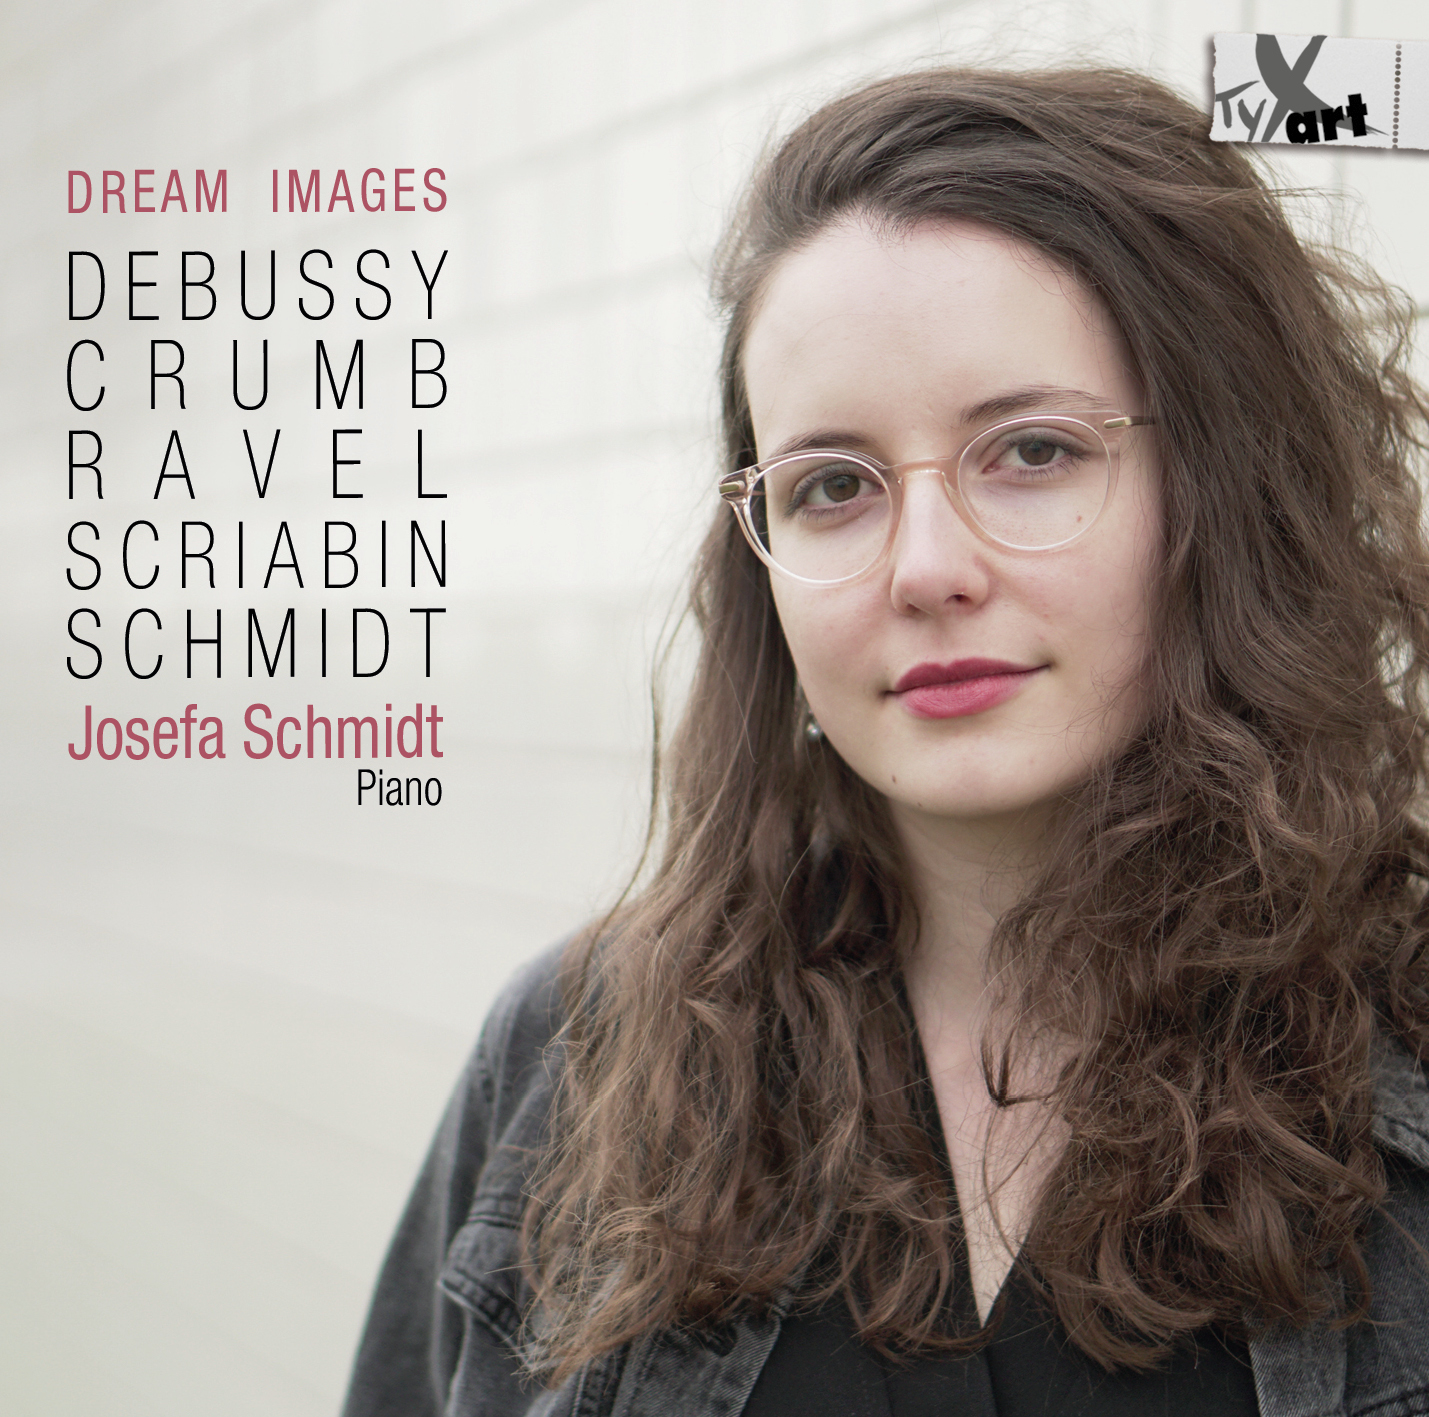 DREAM IMAGES - Josefa Schmidt, Piano